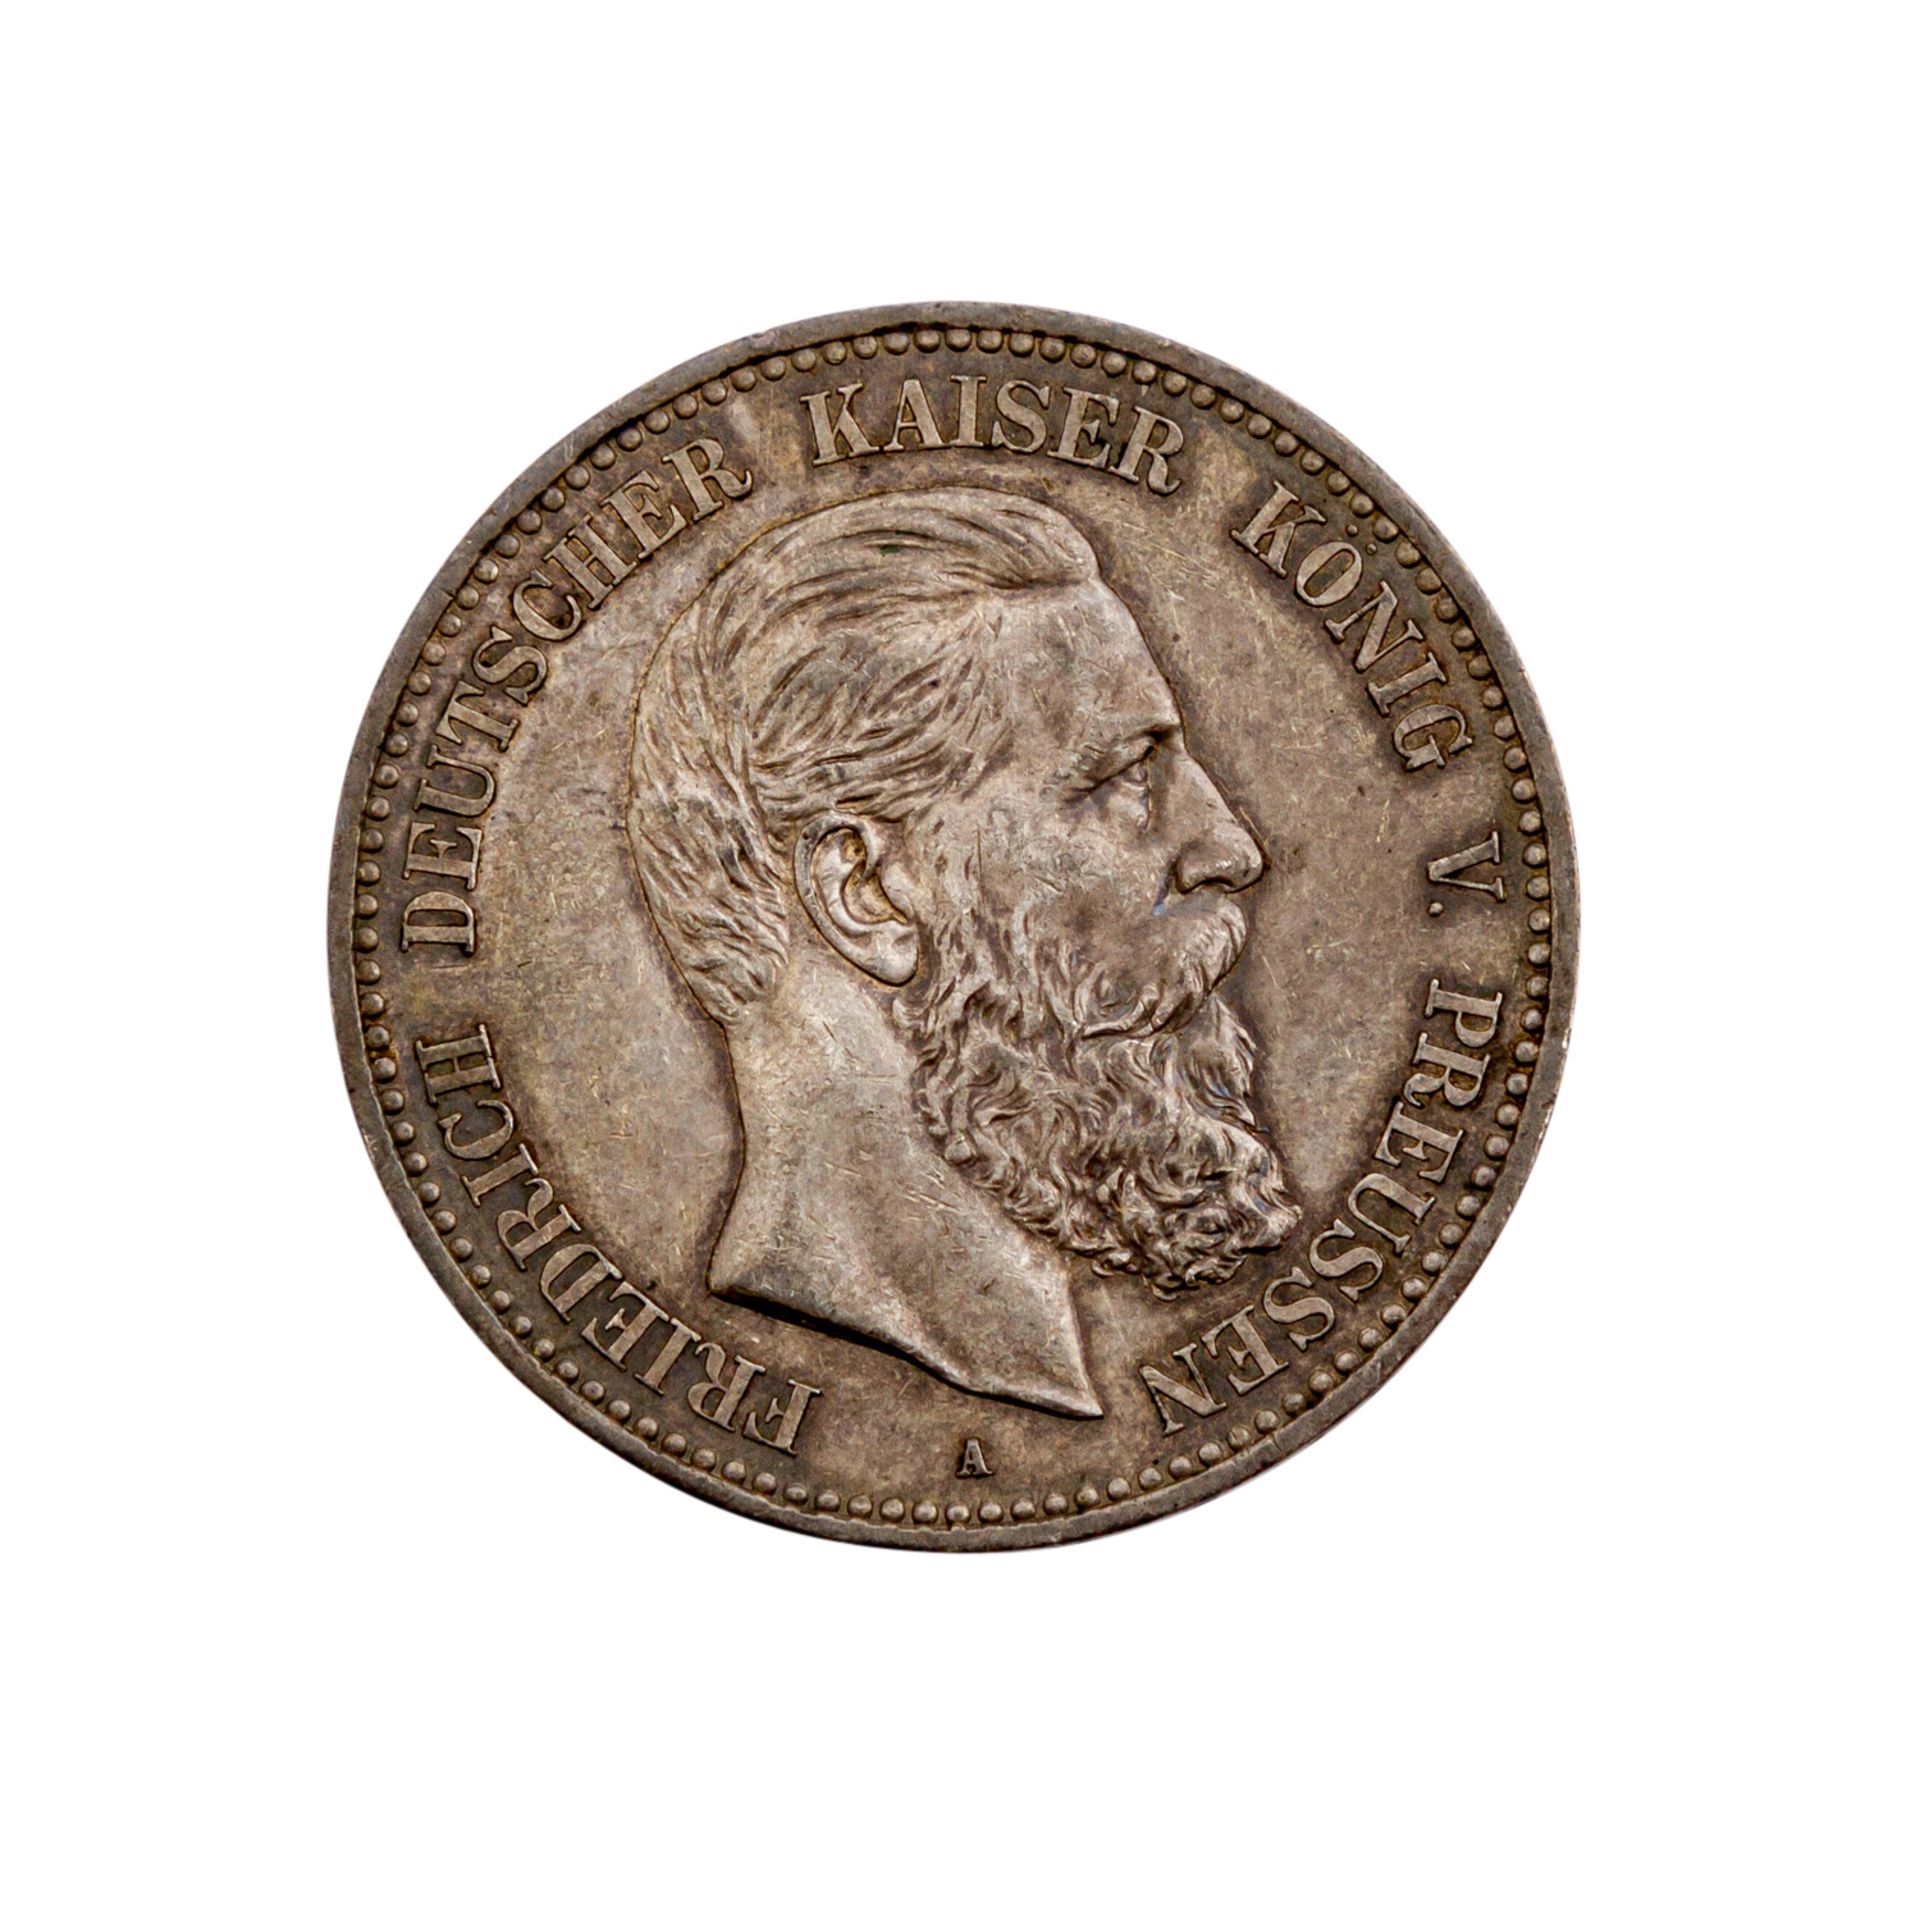 Preussen - 5 Mark 1888, Friedrich,ss+, PatinaPrussia, 5 Mark 1888, Friedrich, vf.+- - -27.00 %